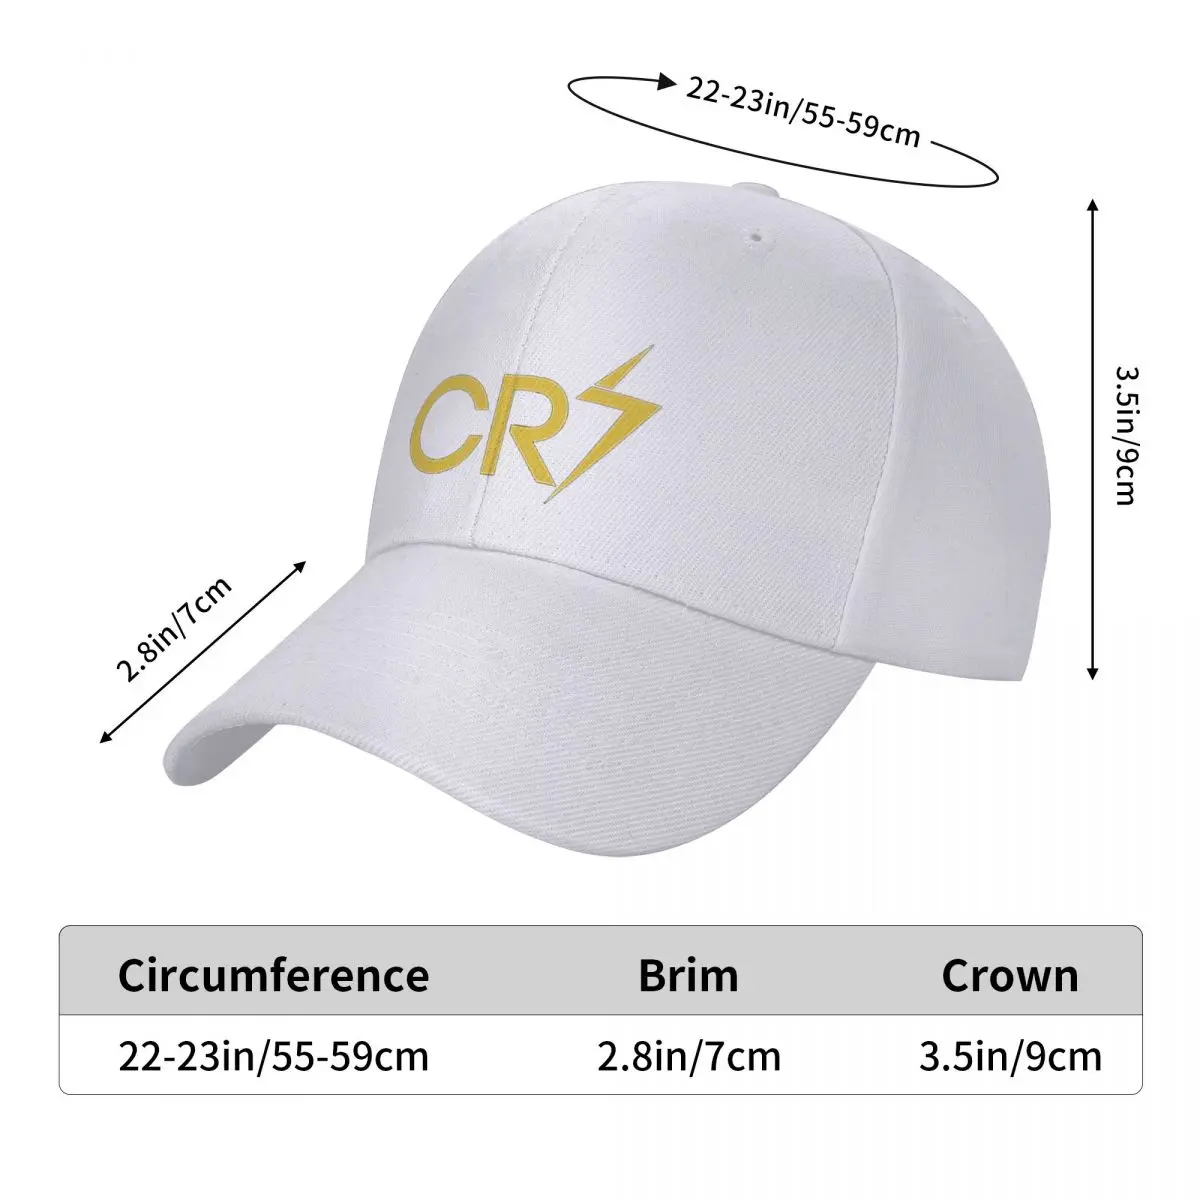 CR7 Cristiano Ronaldo Sepci de Baseball Snapback Moda Pălării de Baseball Respirabil Casual în aer liber Unisex Personalizate Policromie . ' - ' . 1